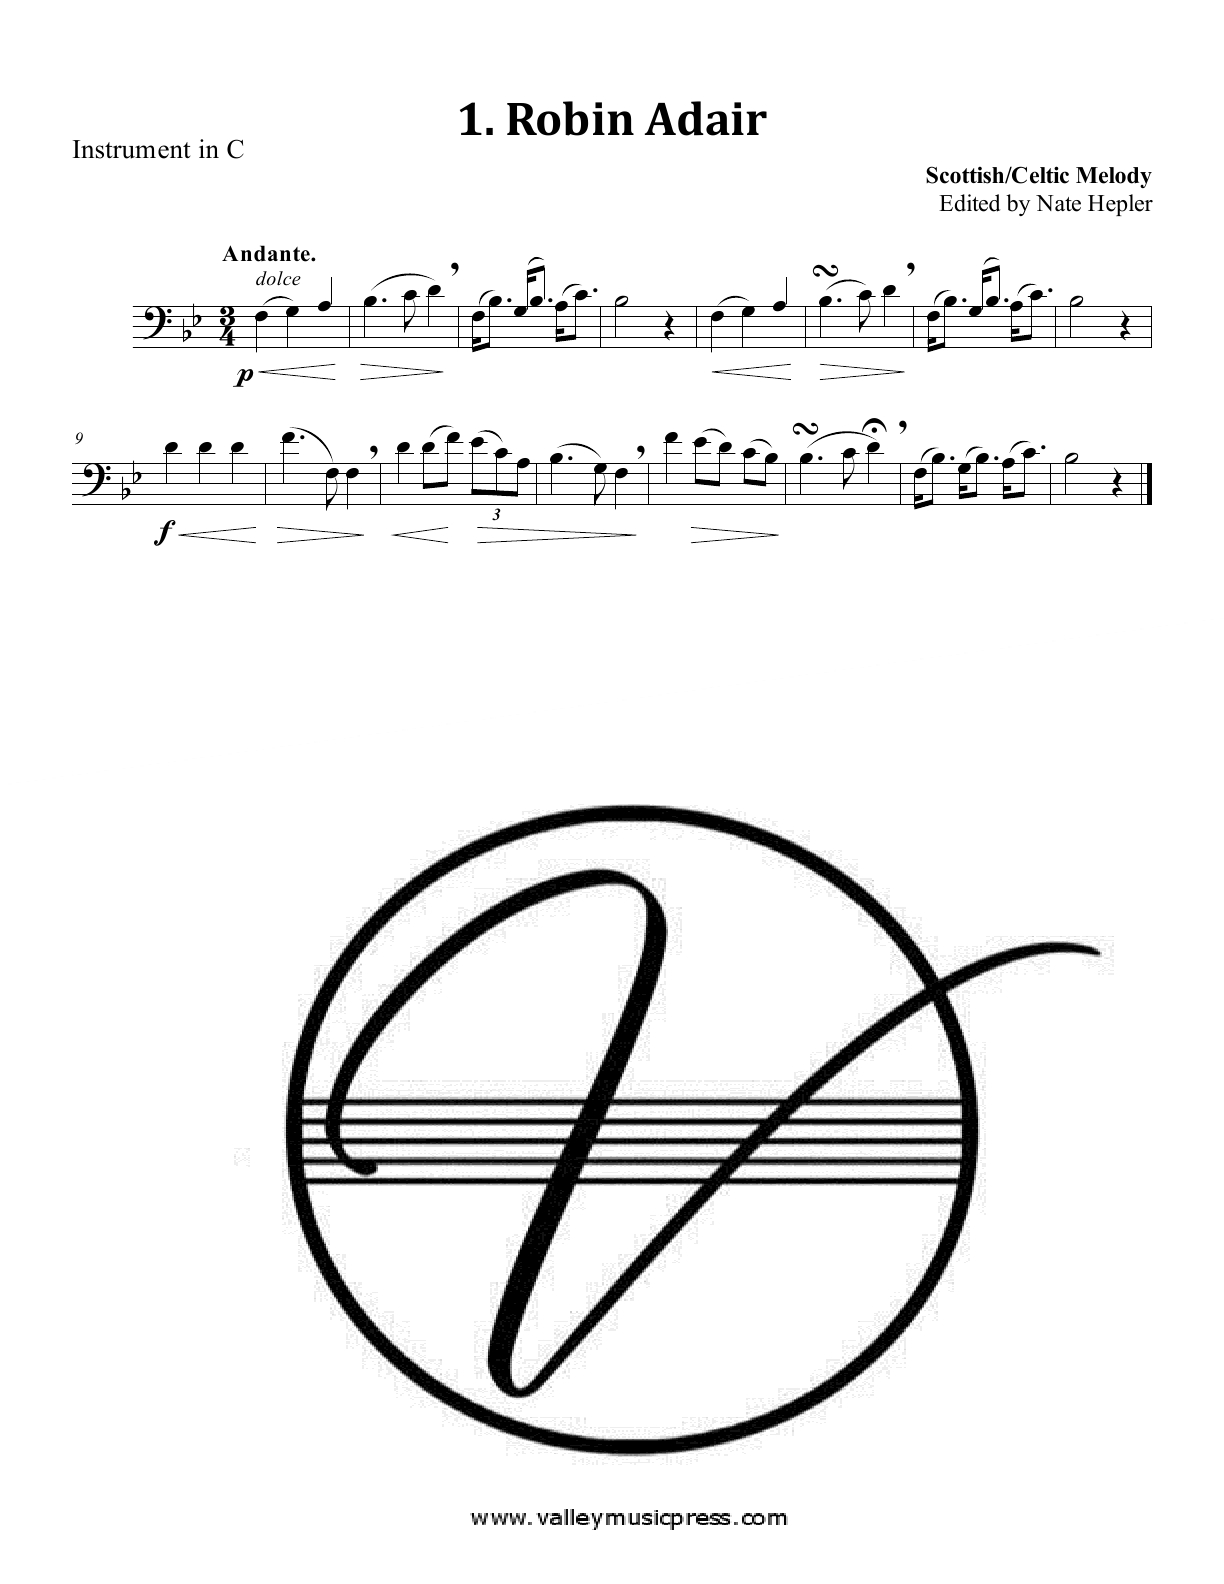 Arban Art of Phrasing Piano Accompaniment Vol. 3 No. 51-75 (Trb) - Click Image to Close